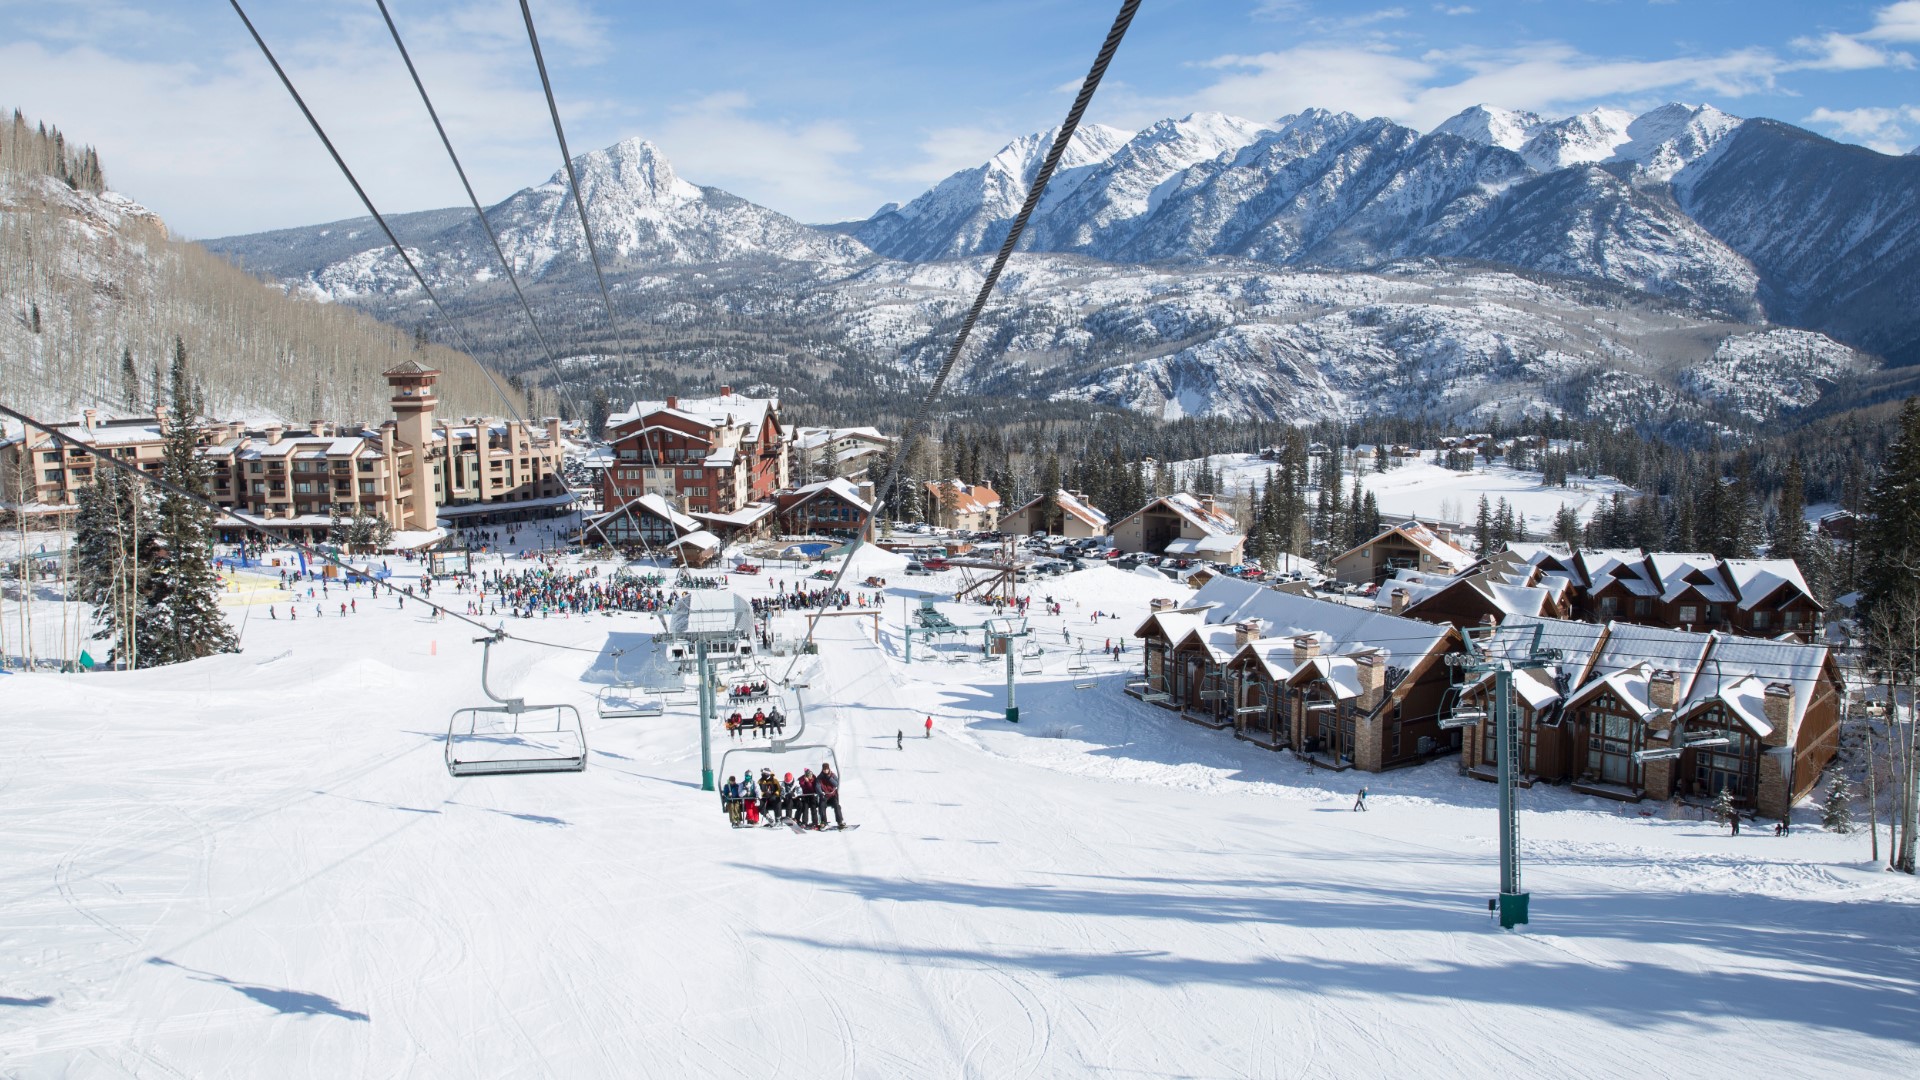 Snows keep Colorado ski resorts open, mountain passes closed